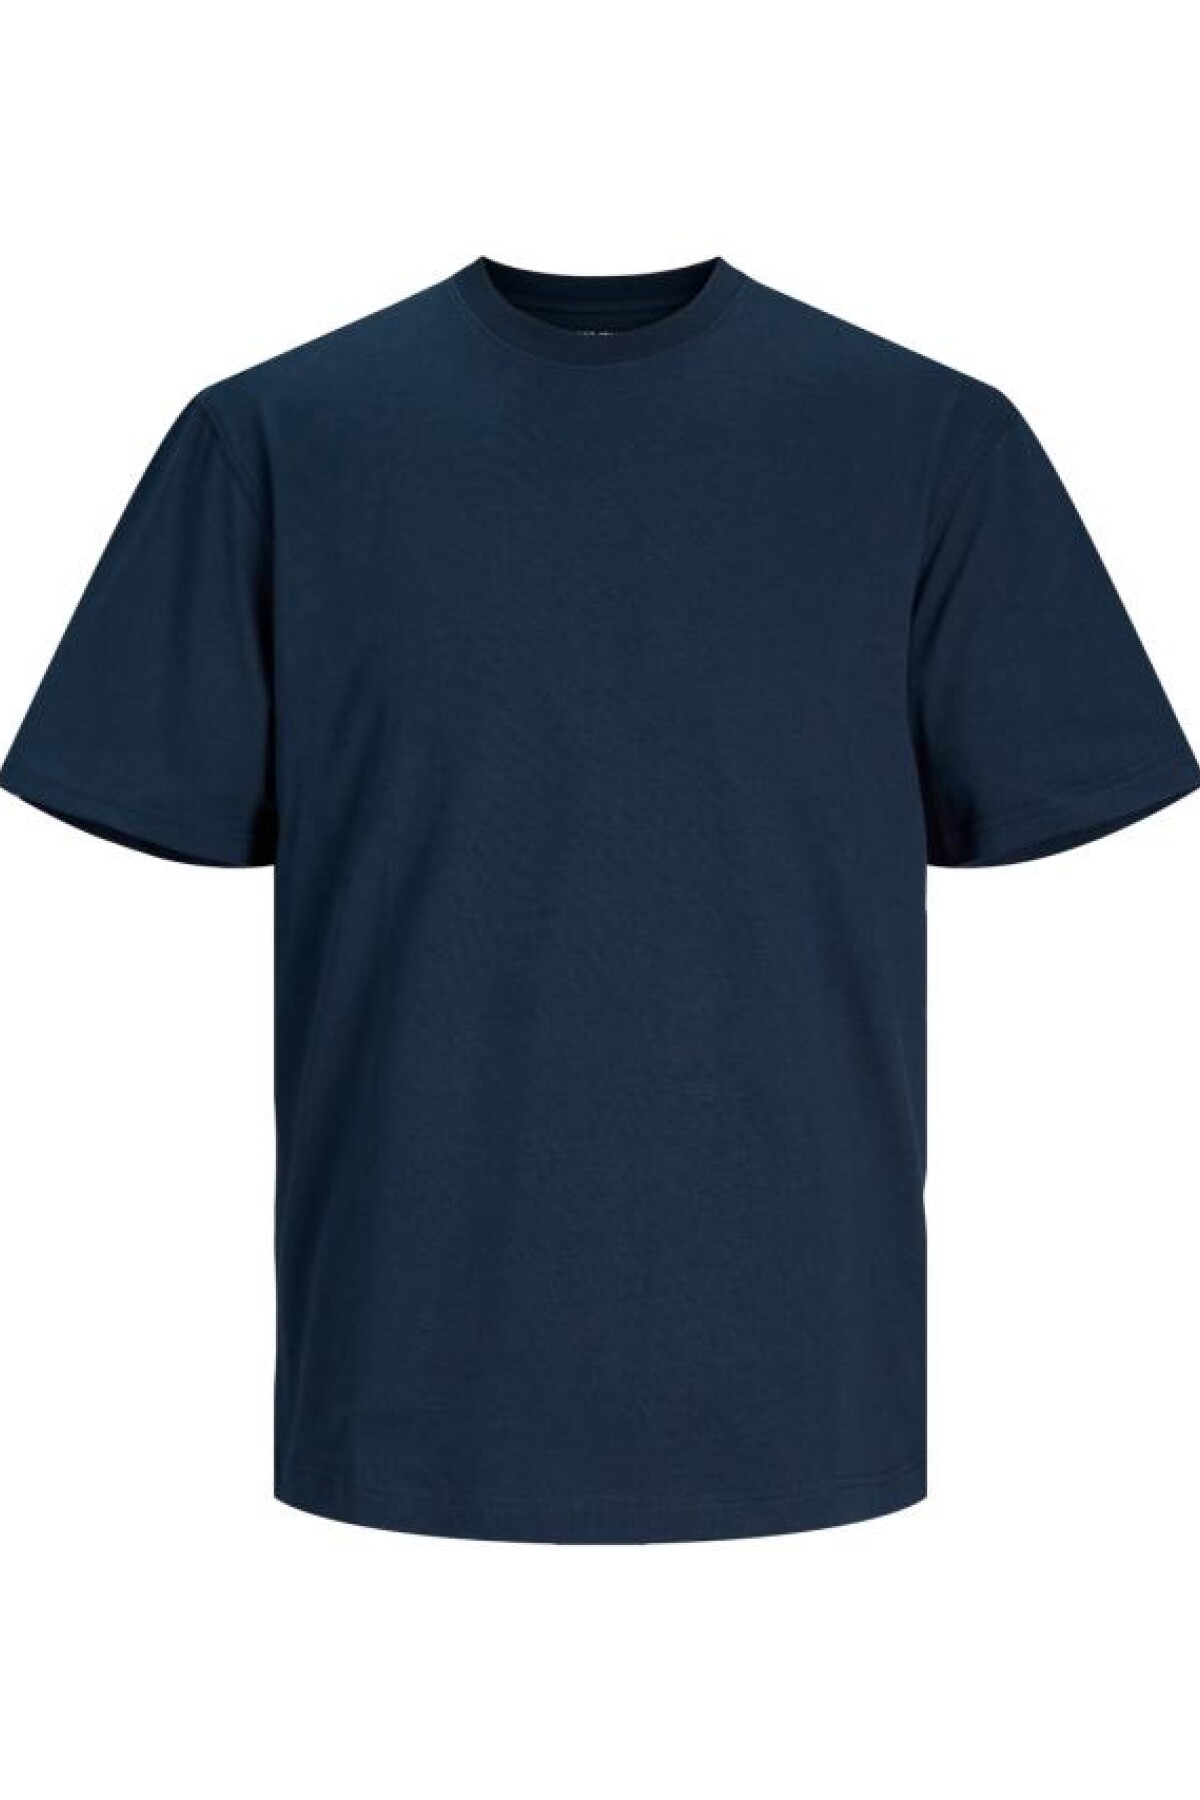 Camiseta Relaxed Básica Oversize Navy Blazer